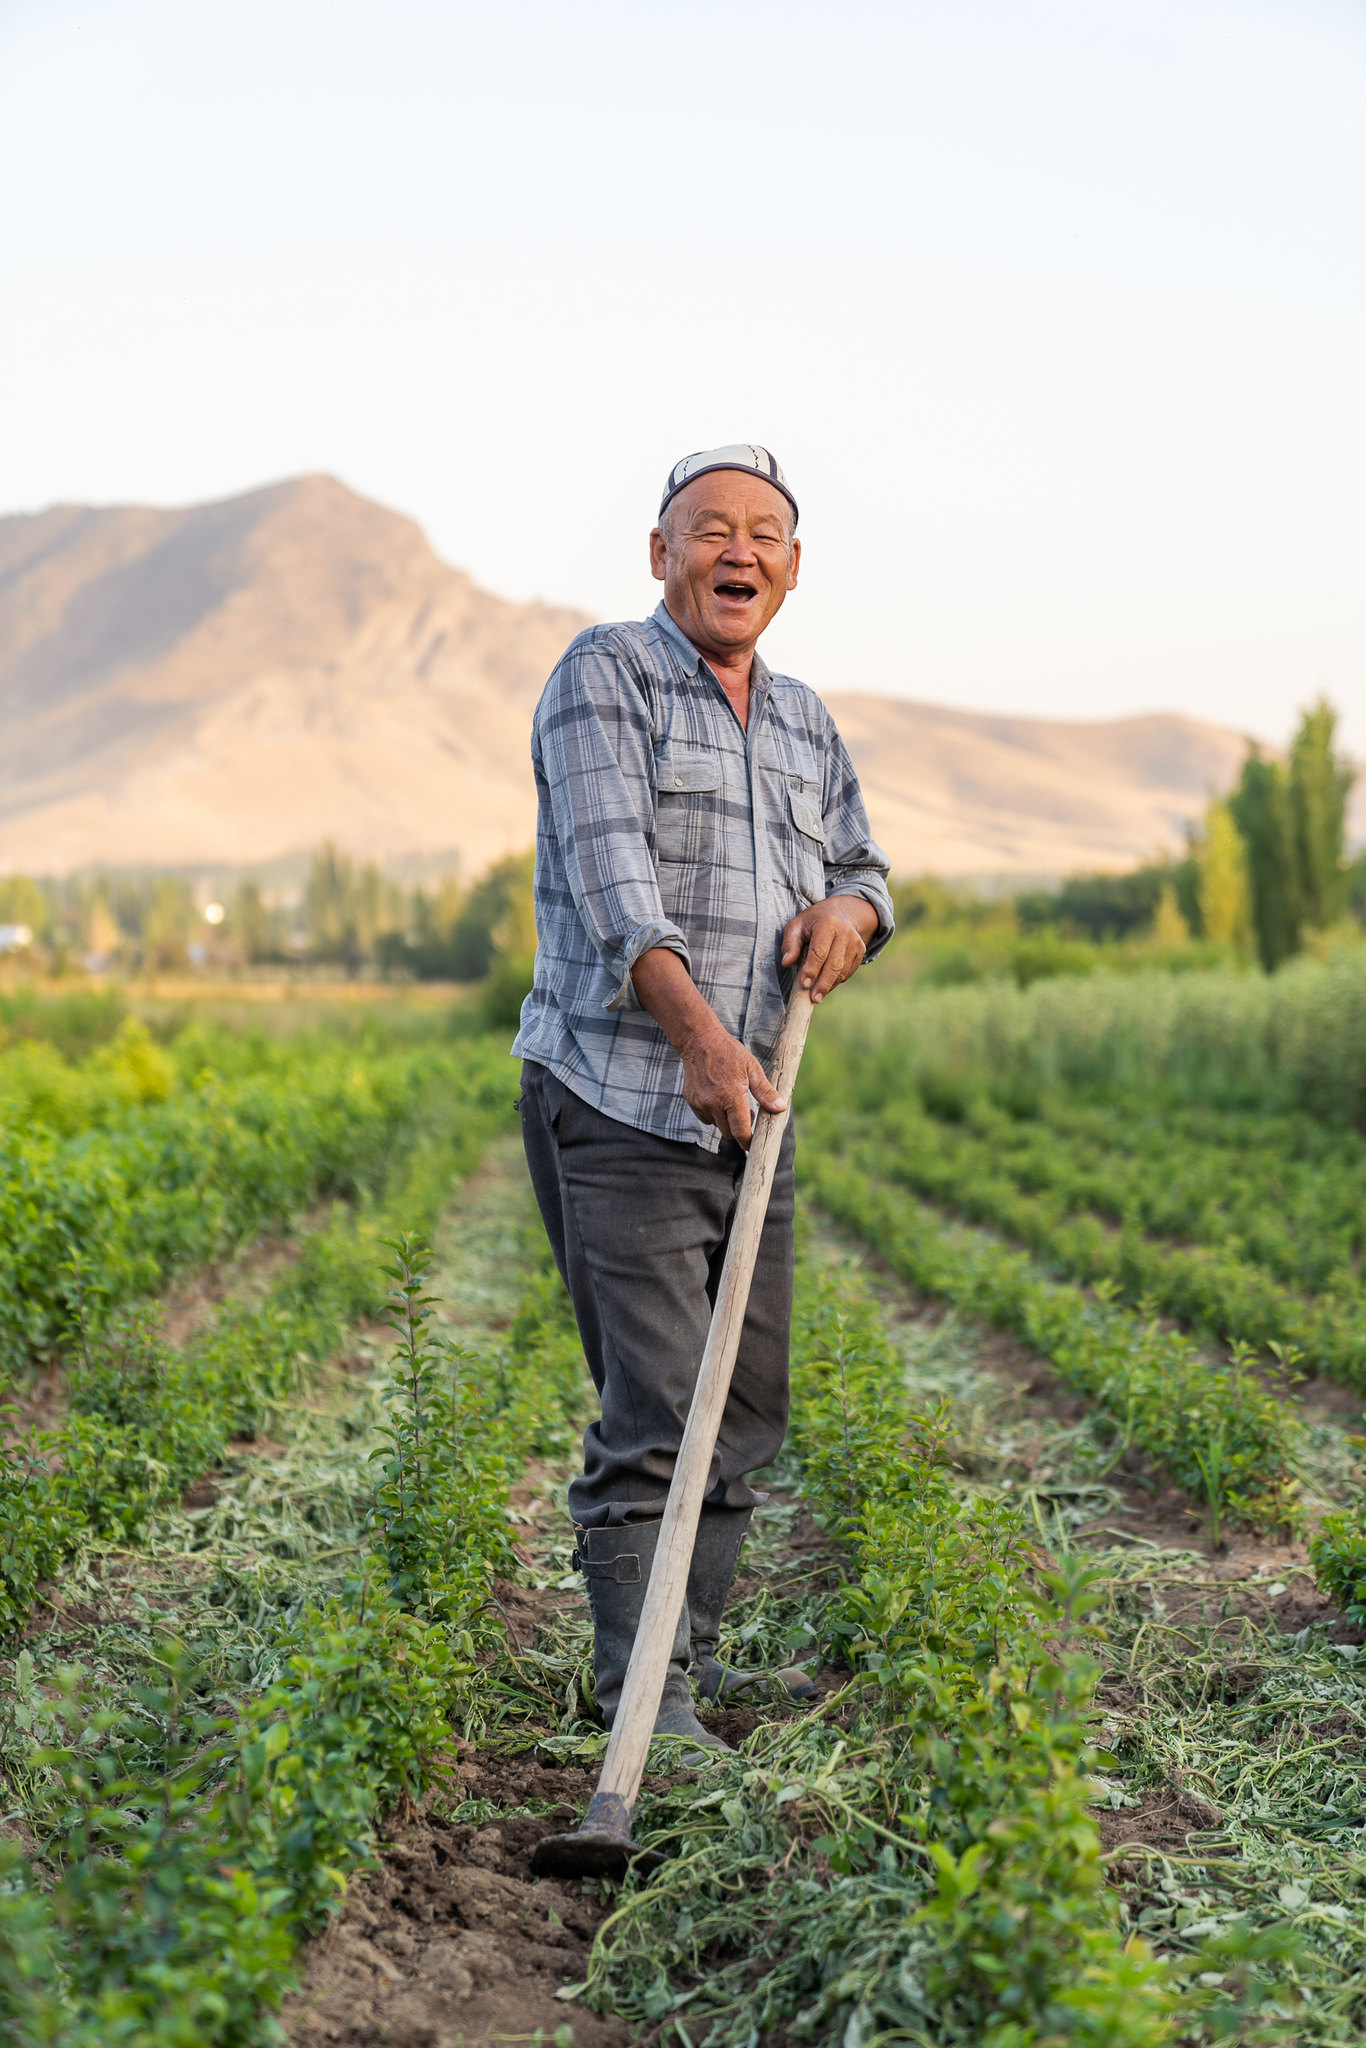 Karimkol, a farmer from the Jalal-abad region of Kyrgyzstan